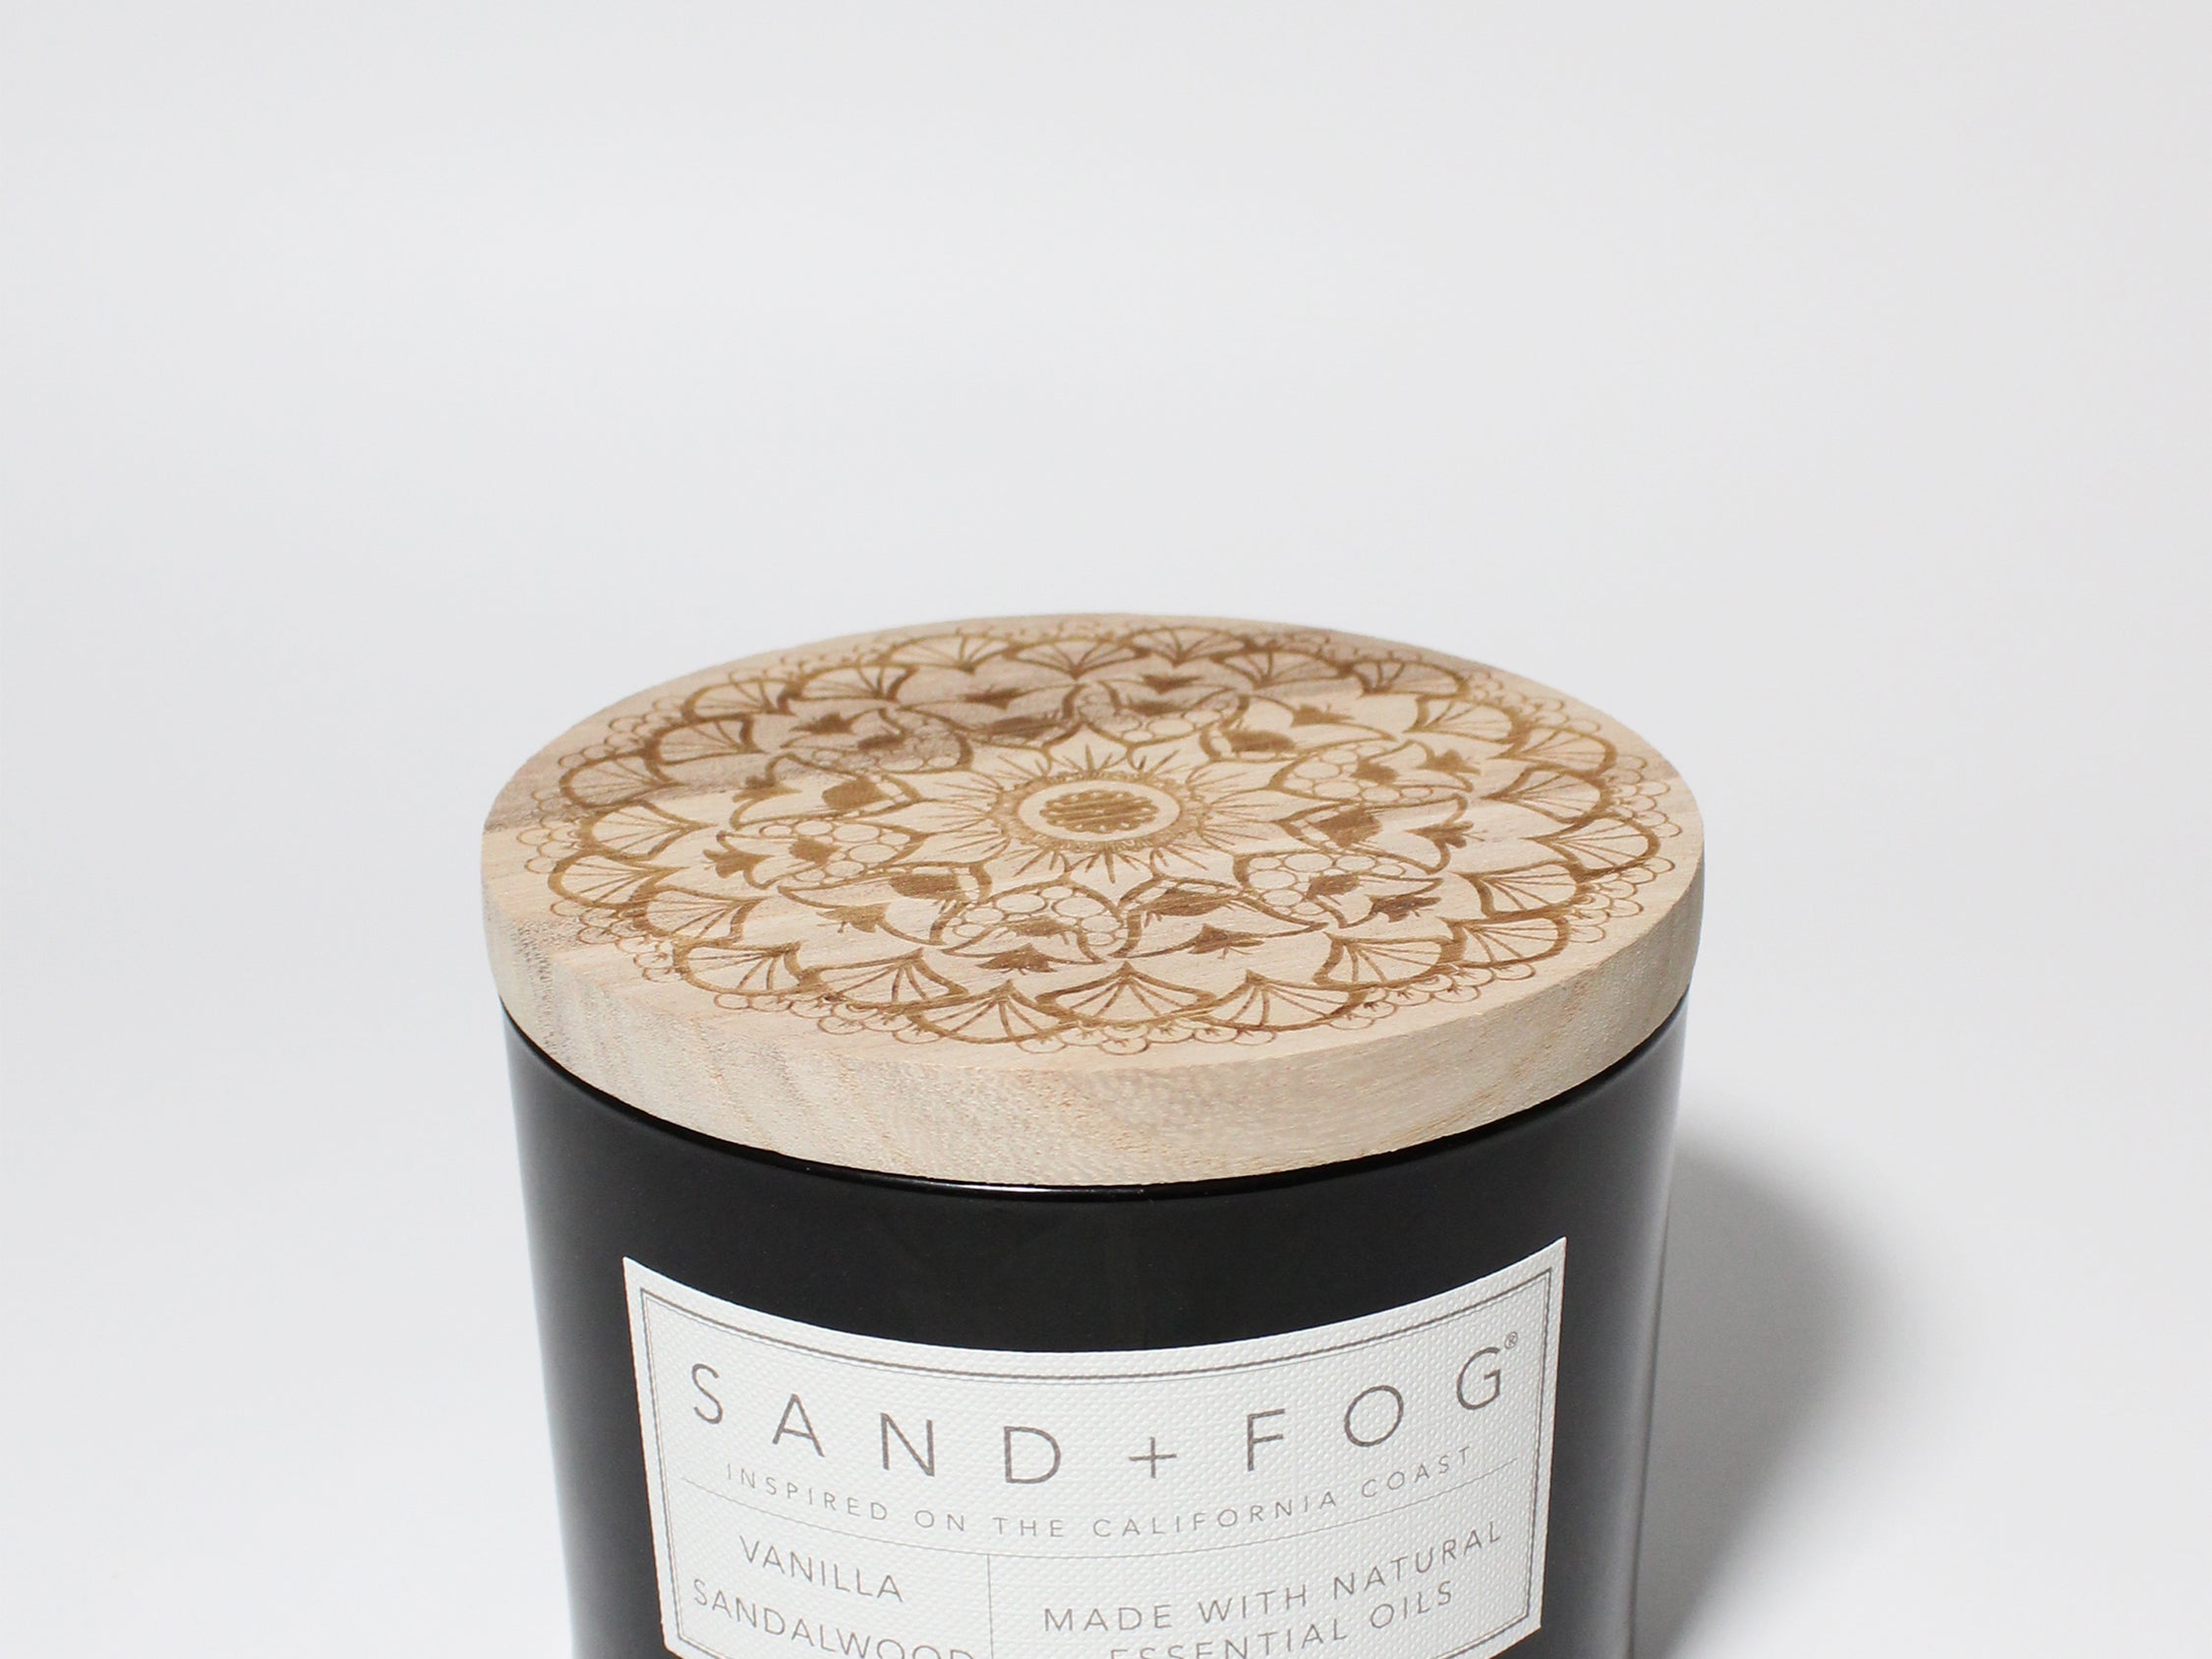 Vanilla Sandalwood 12 oz scented candle Black vessel with Carved wood lid